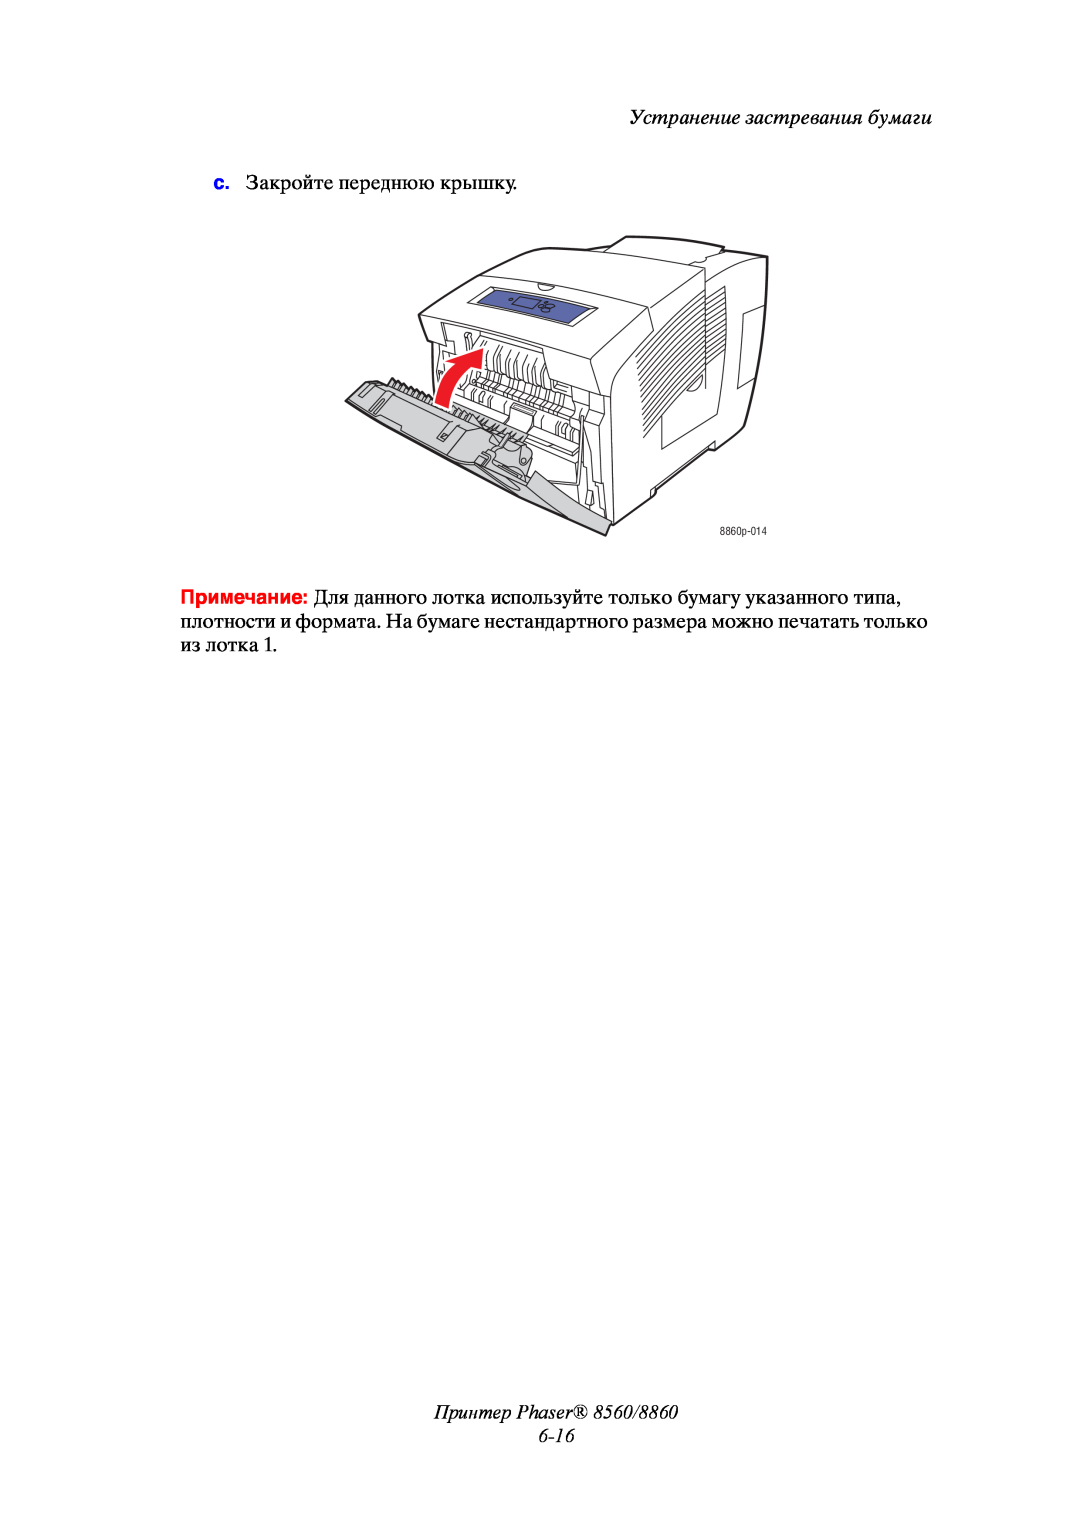 Xerox manual Принтер Phaser 8560/8860 6-16, Устранение застревания бумаги, 8860p-014 